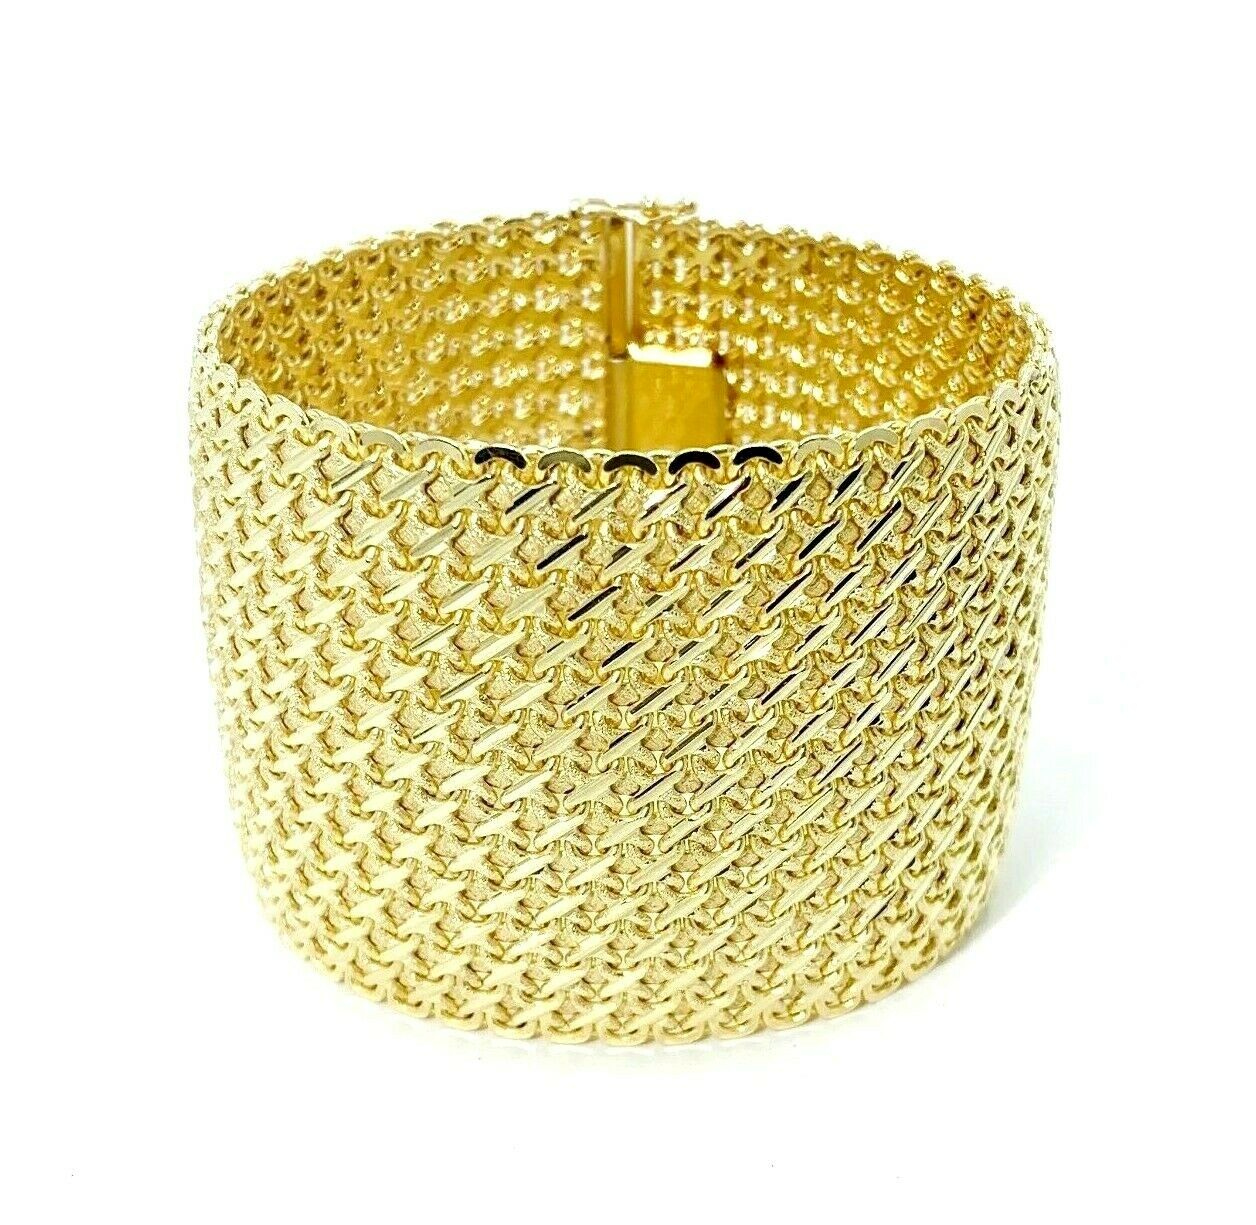 Italian Gold Wide Mesh Link & Chain Bracelet in 14K Gold - Gold